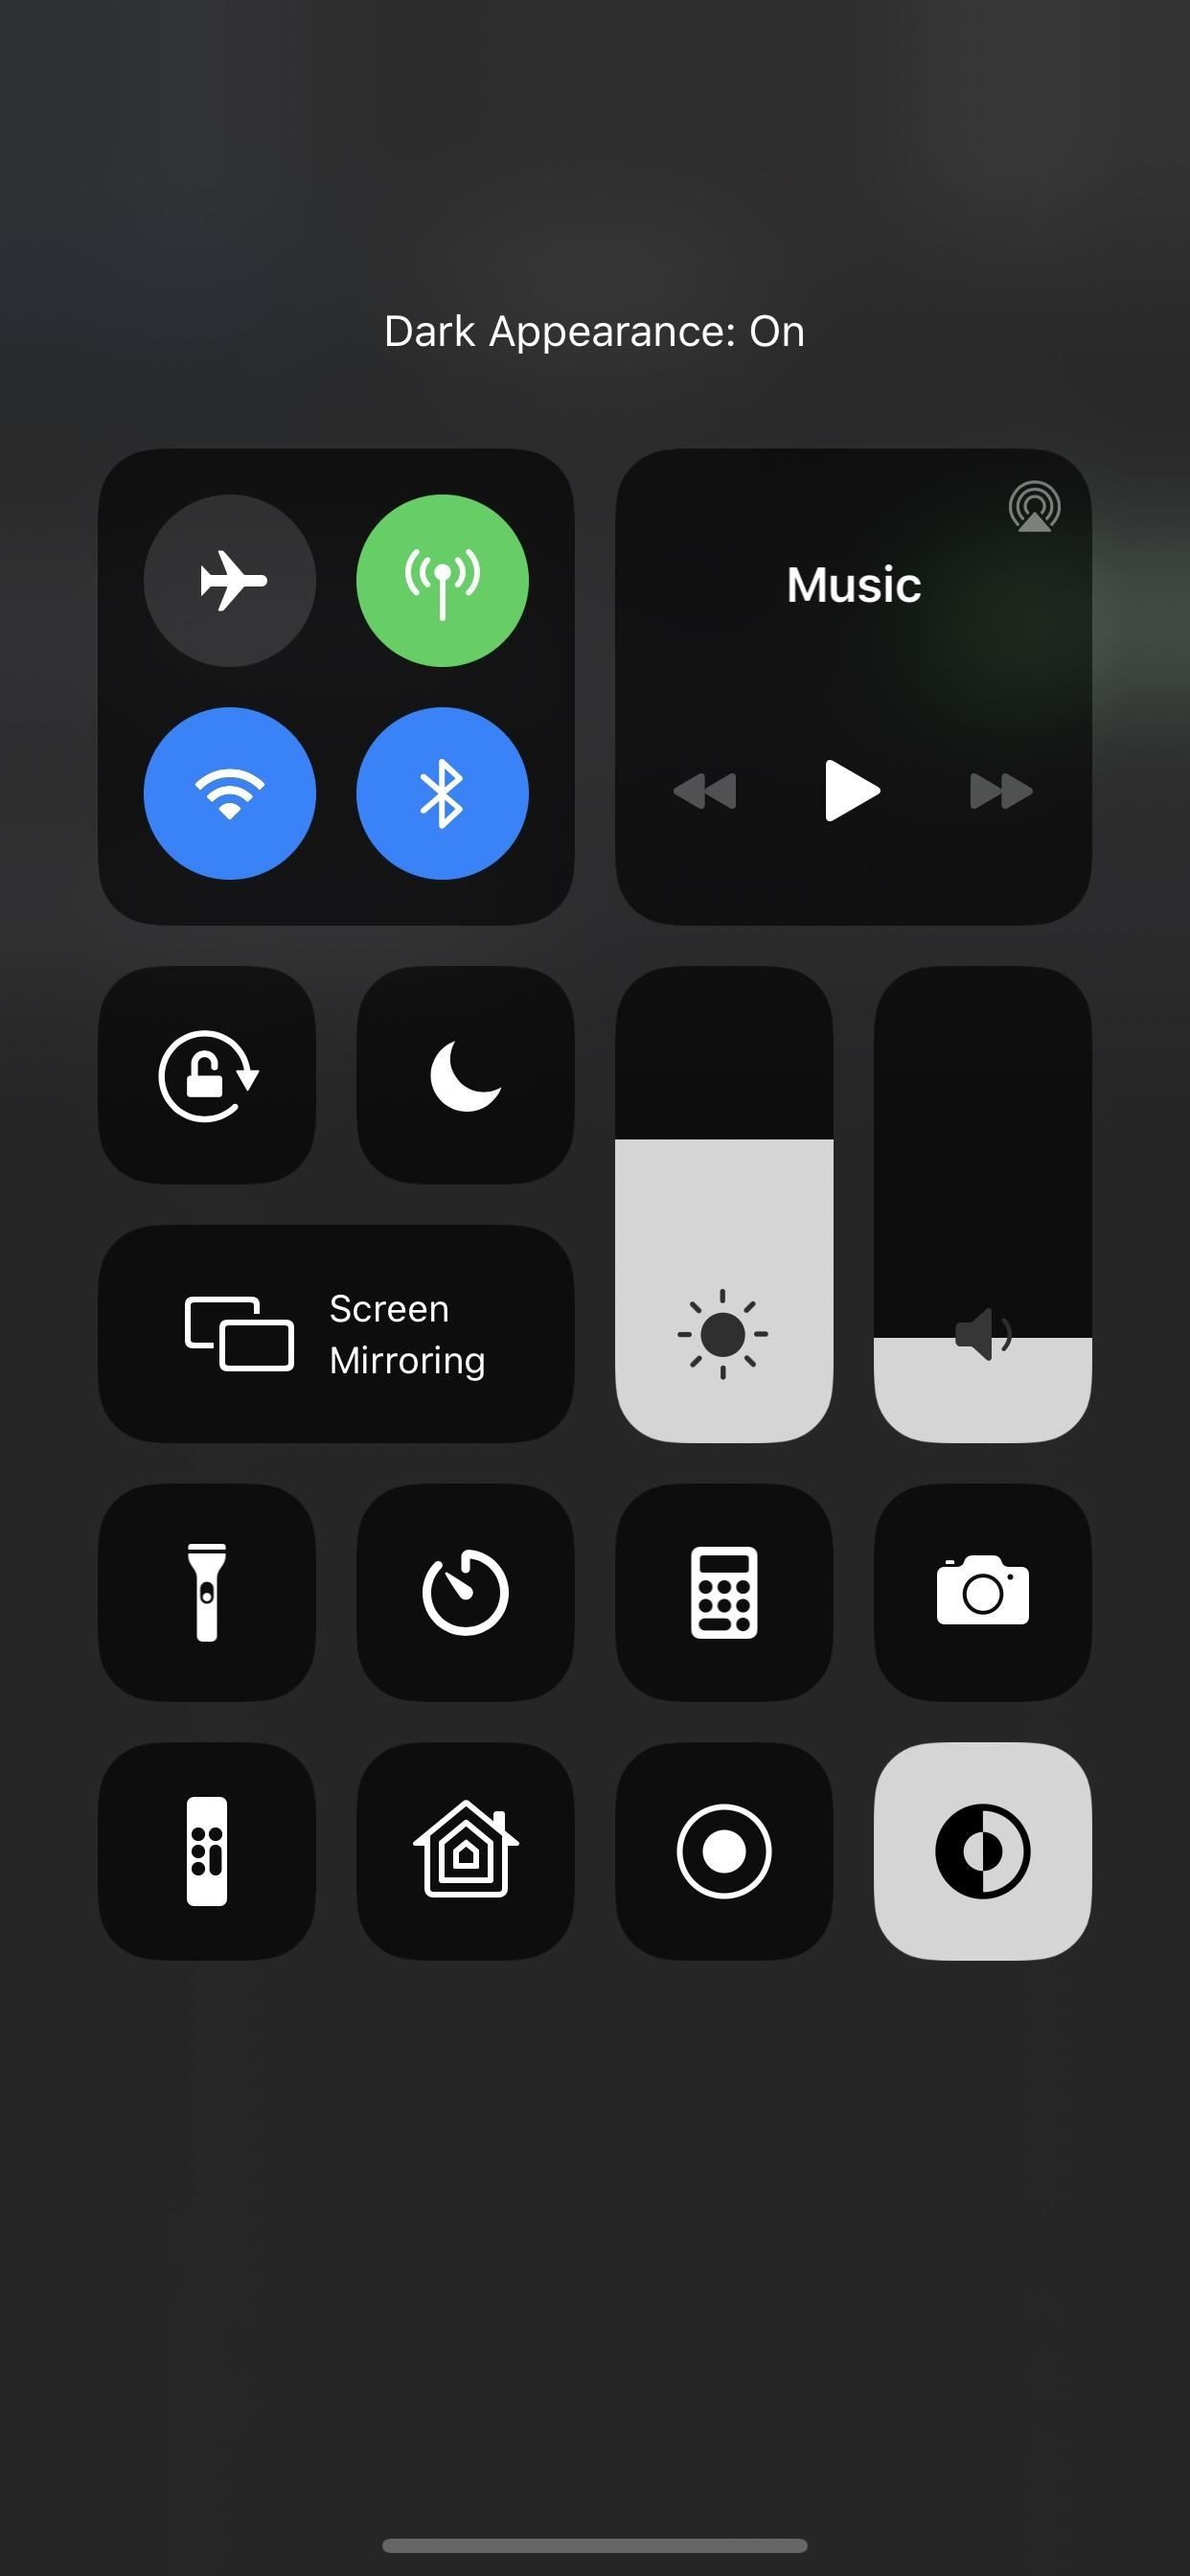 Turn dark mode iphone only